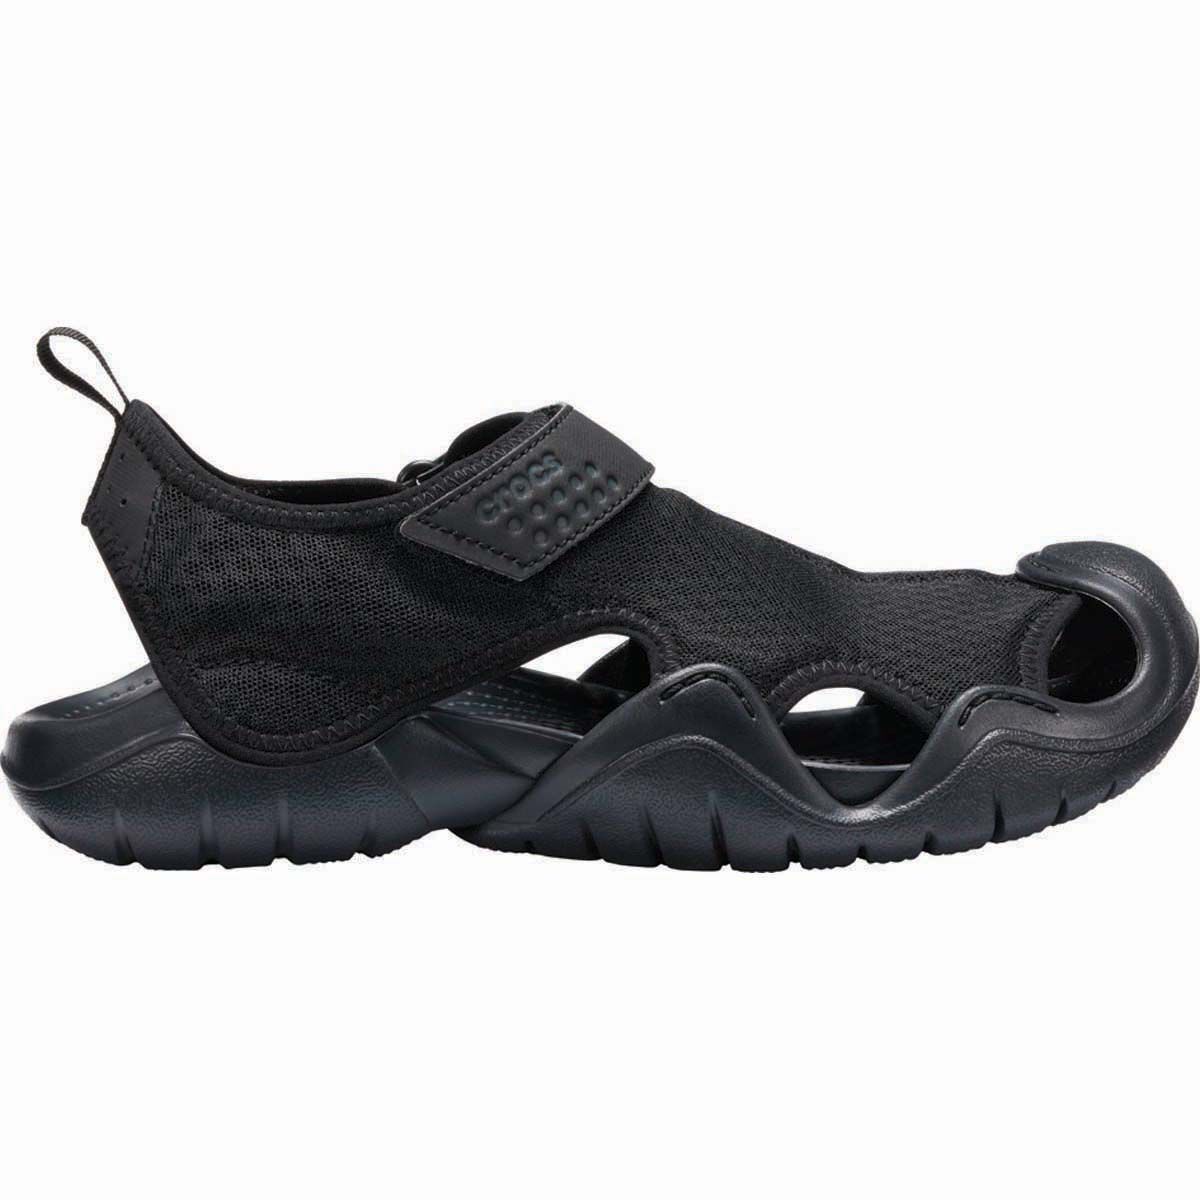 swiftwater sandals crocs